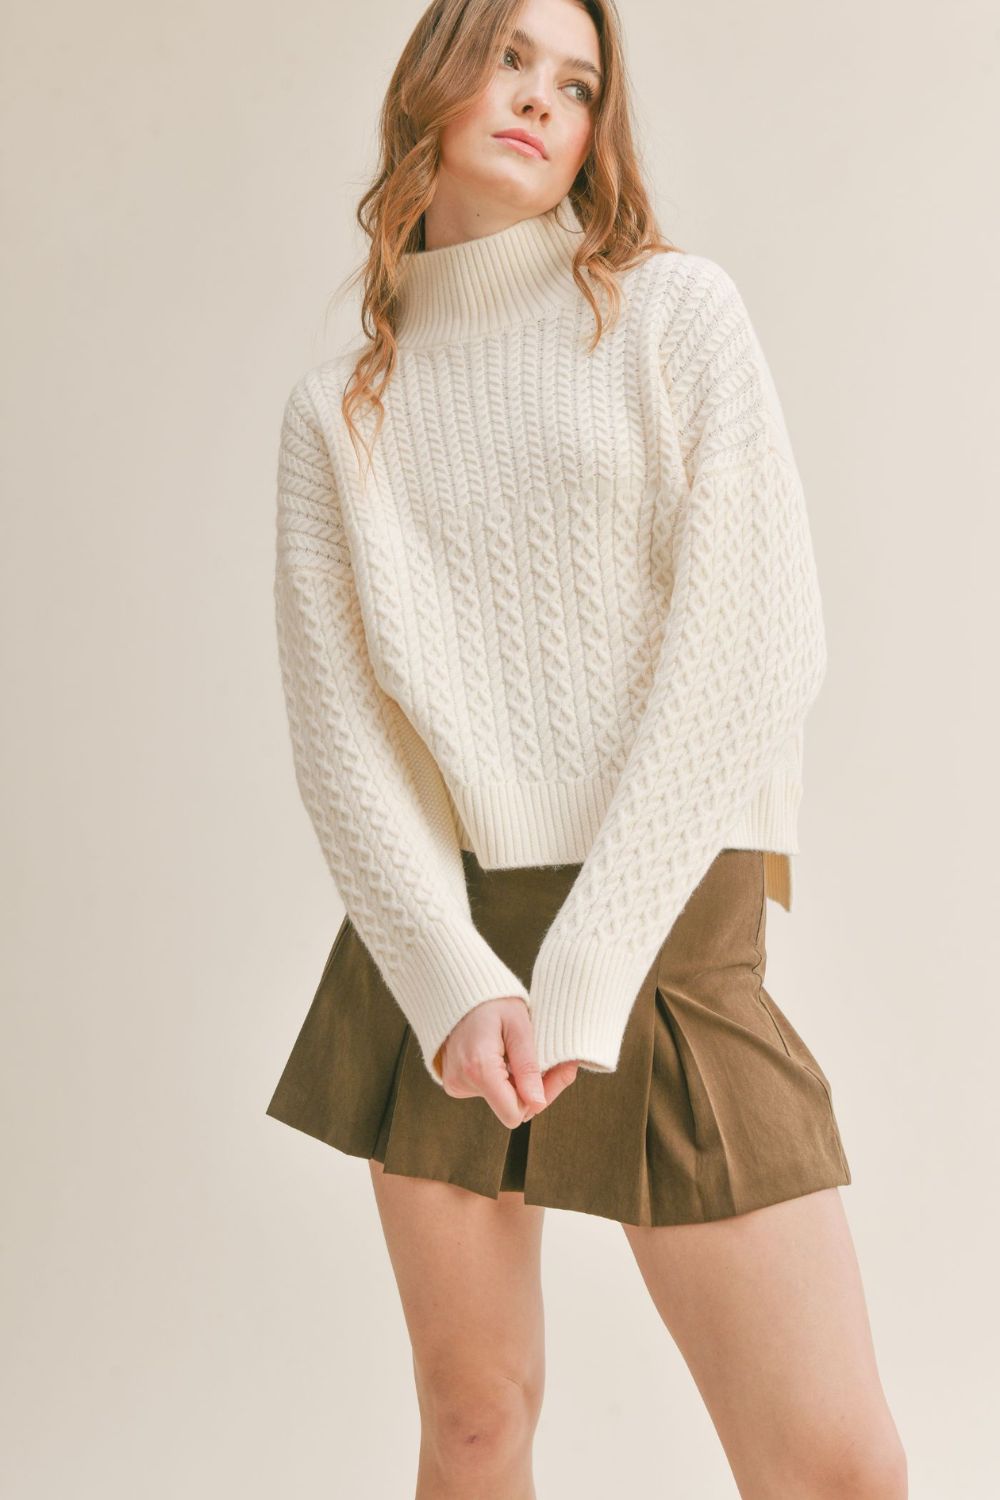 Women's Mock Neck Knit Sweater | Sadie & Sage | Ivory - Women's Shirts & Tops - Blooming Daily